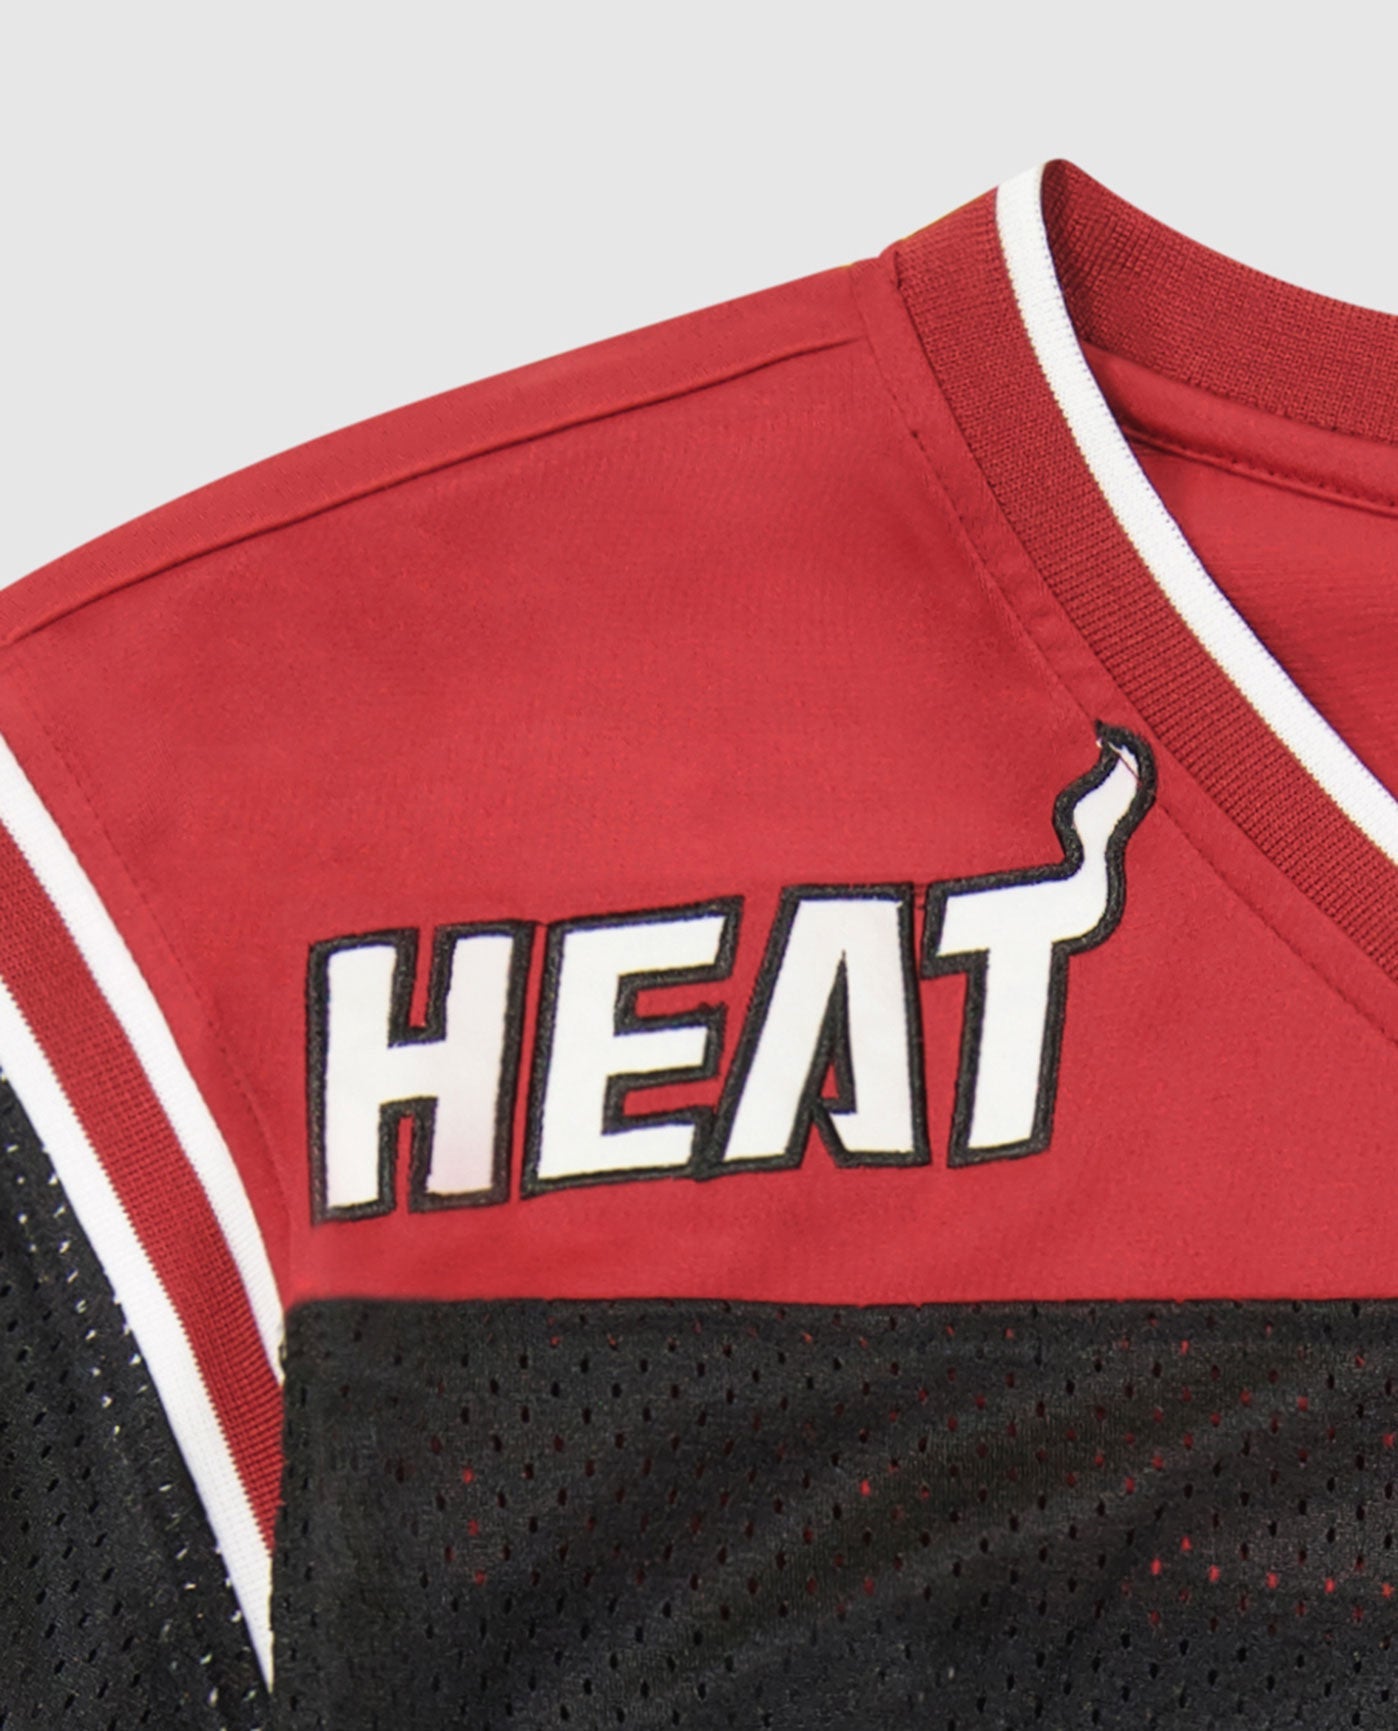 Miami heat logo writing below right shoulder | Heat Black